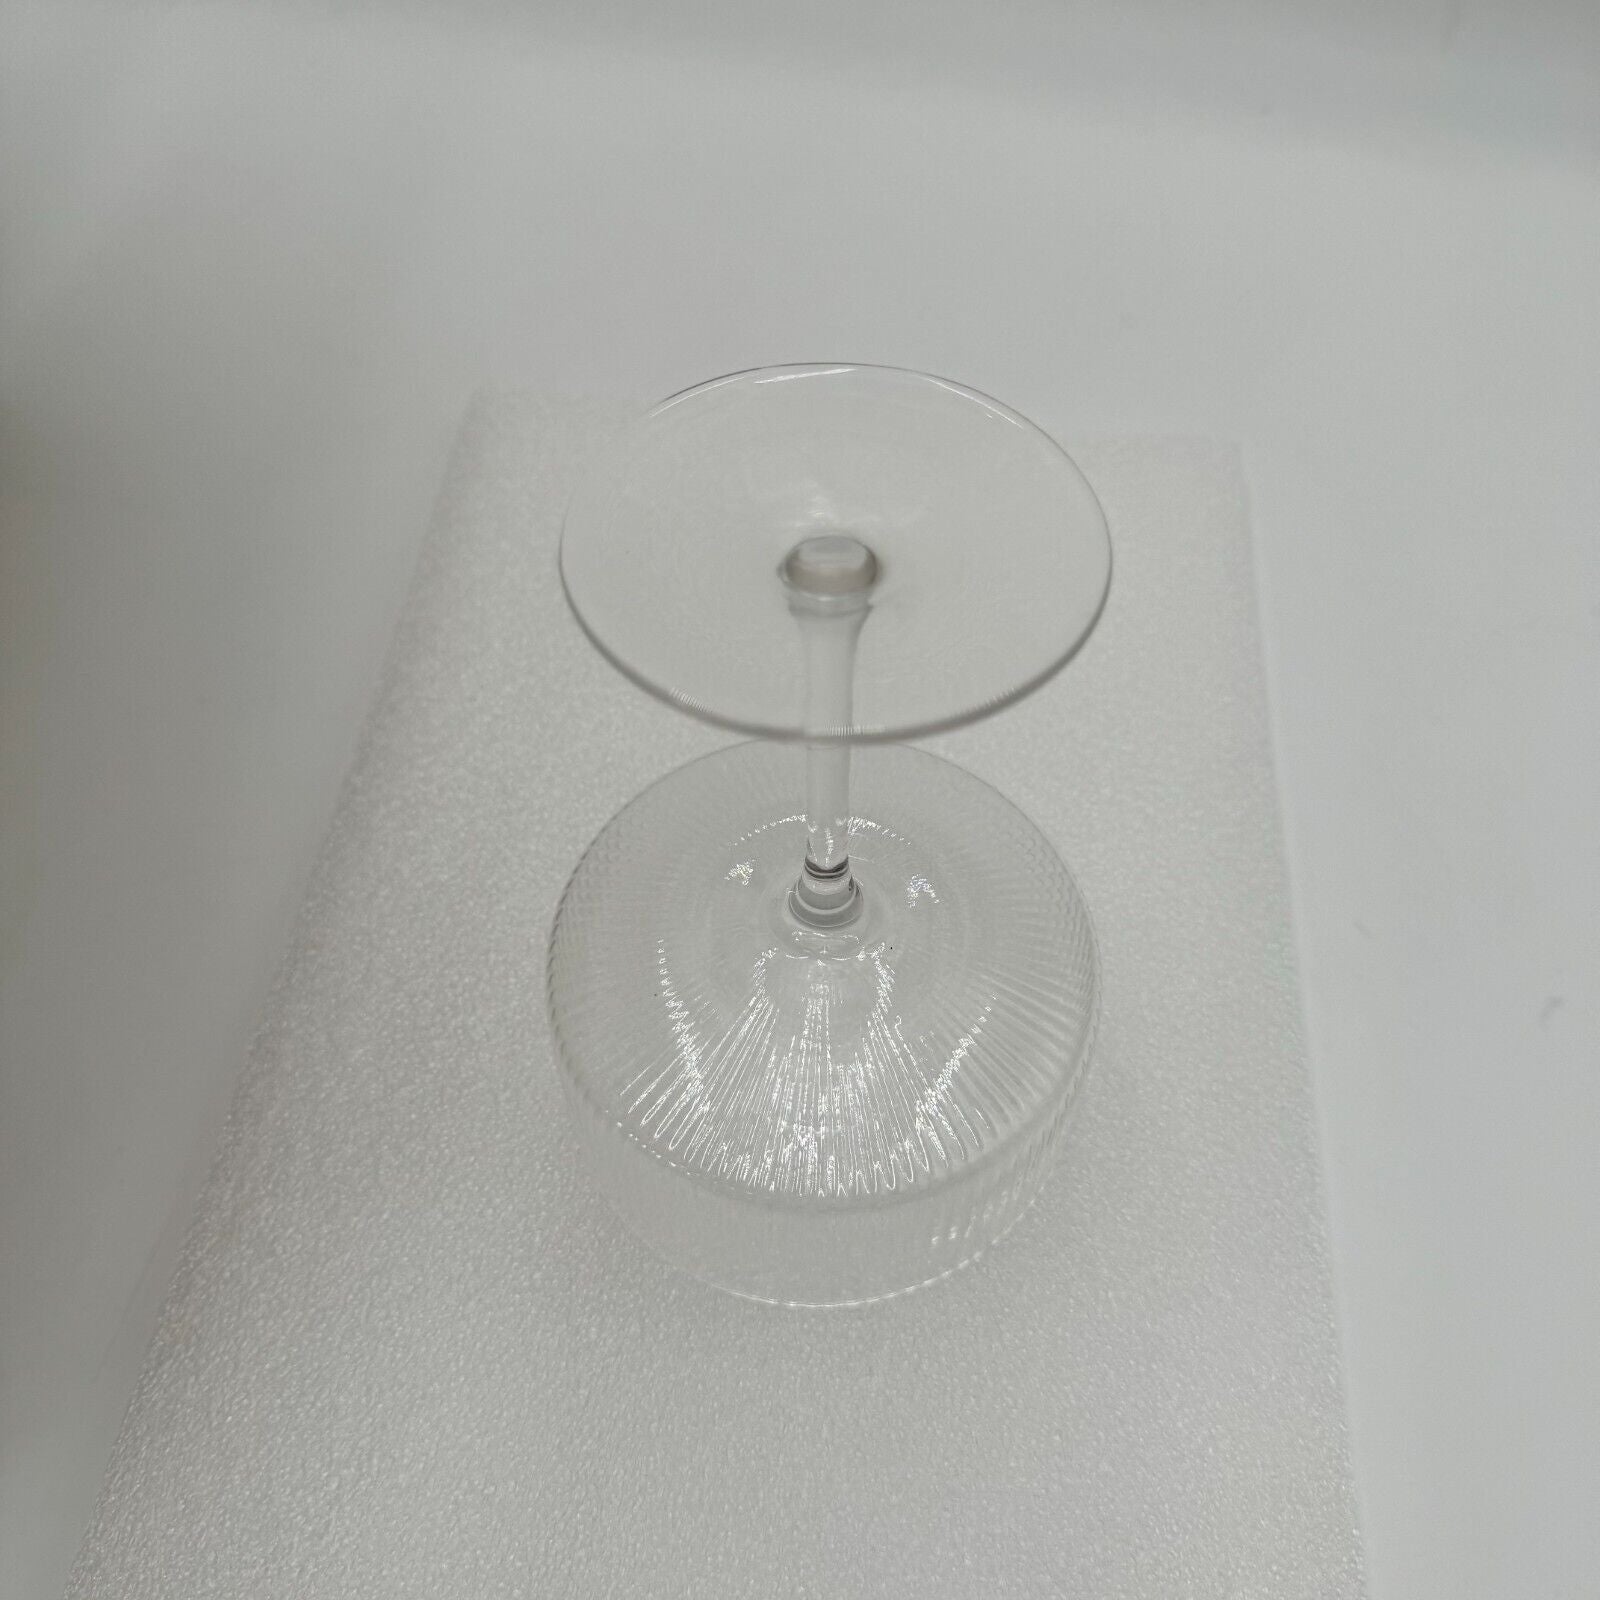 Cocktail Glasses Set of 4 Handmade Glass Ripples Design Chamagne Dining New